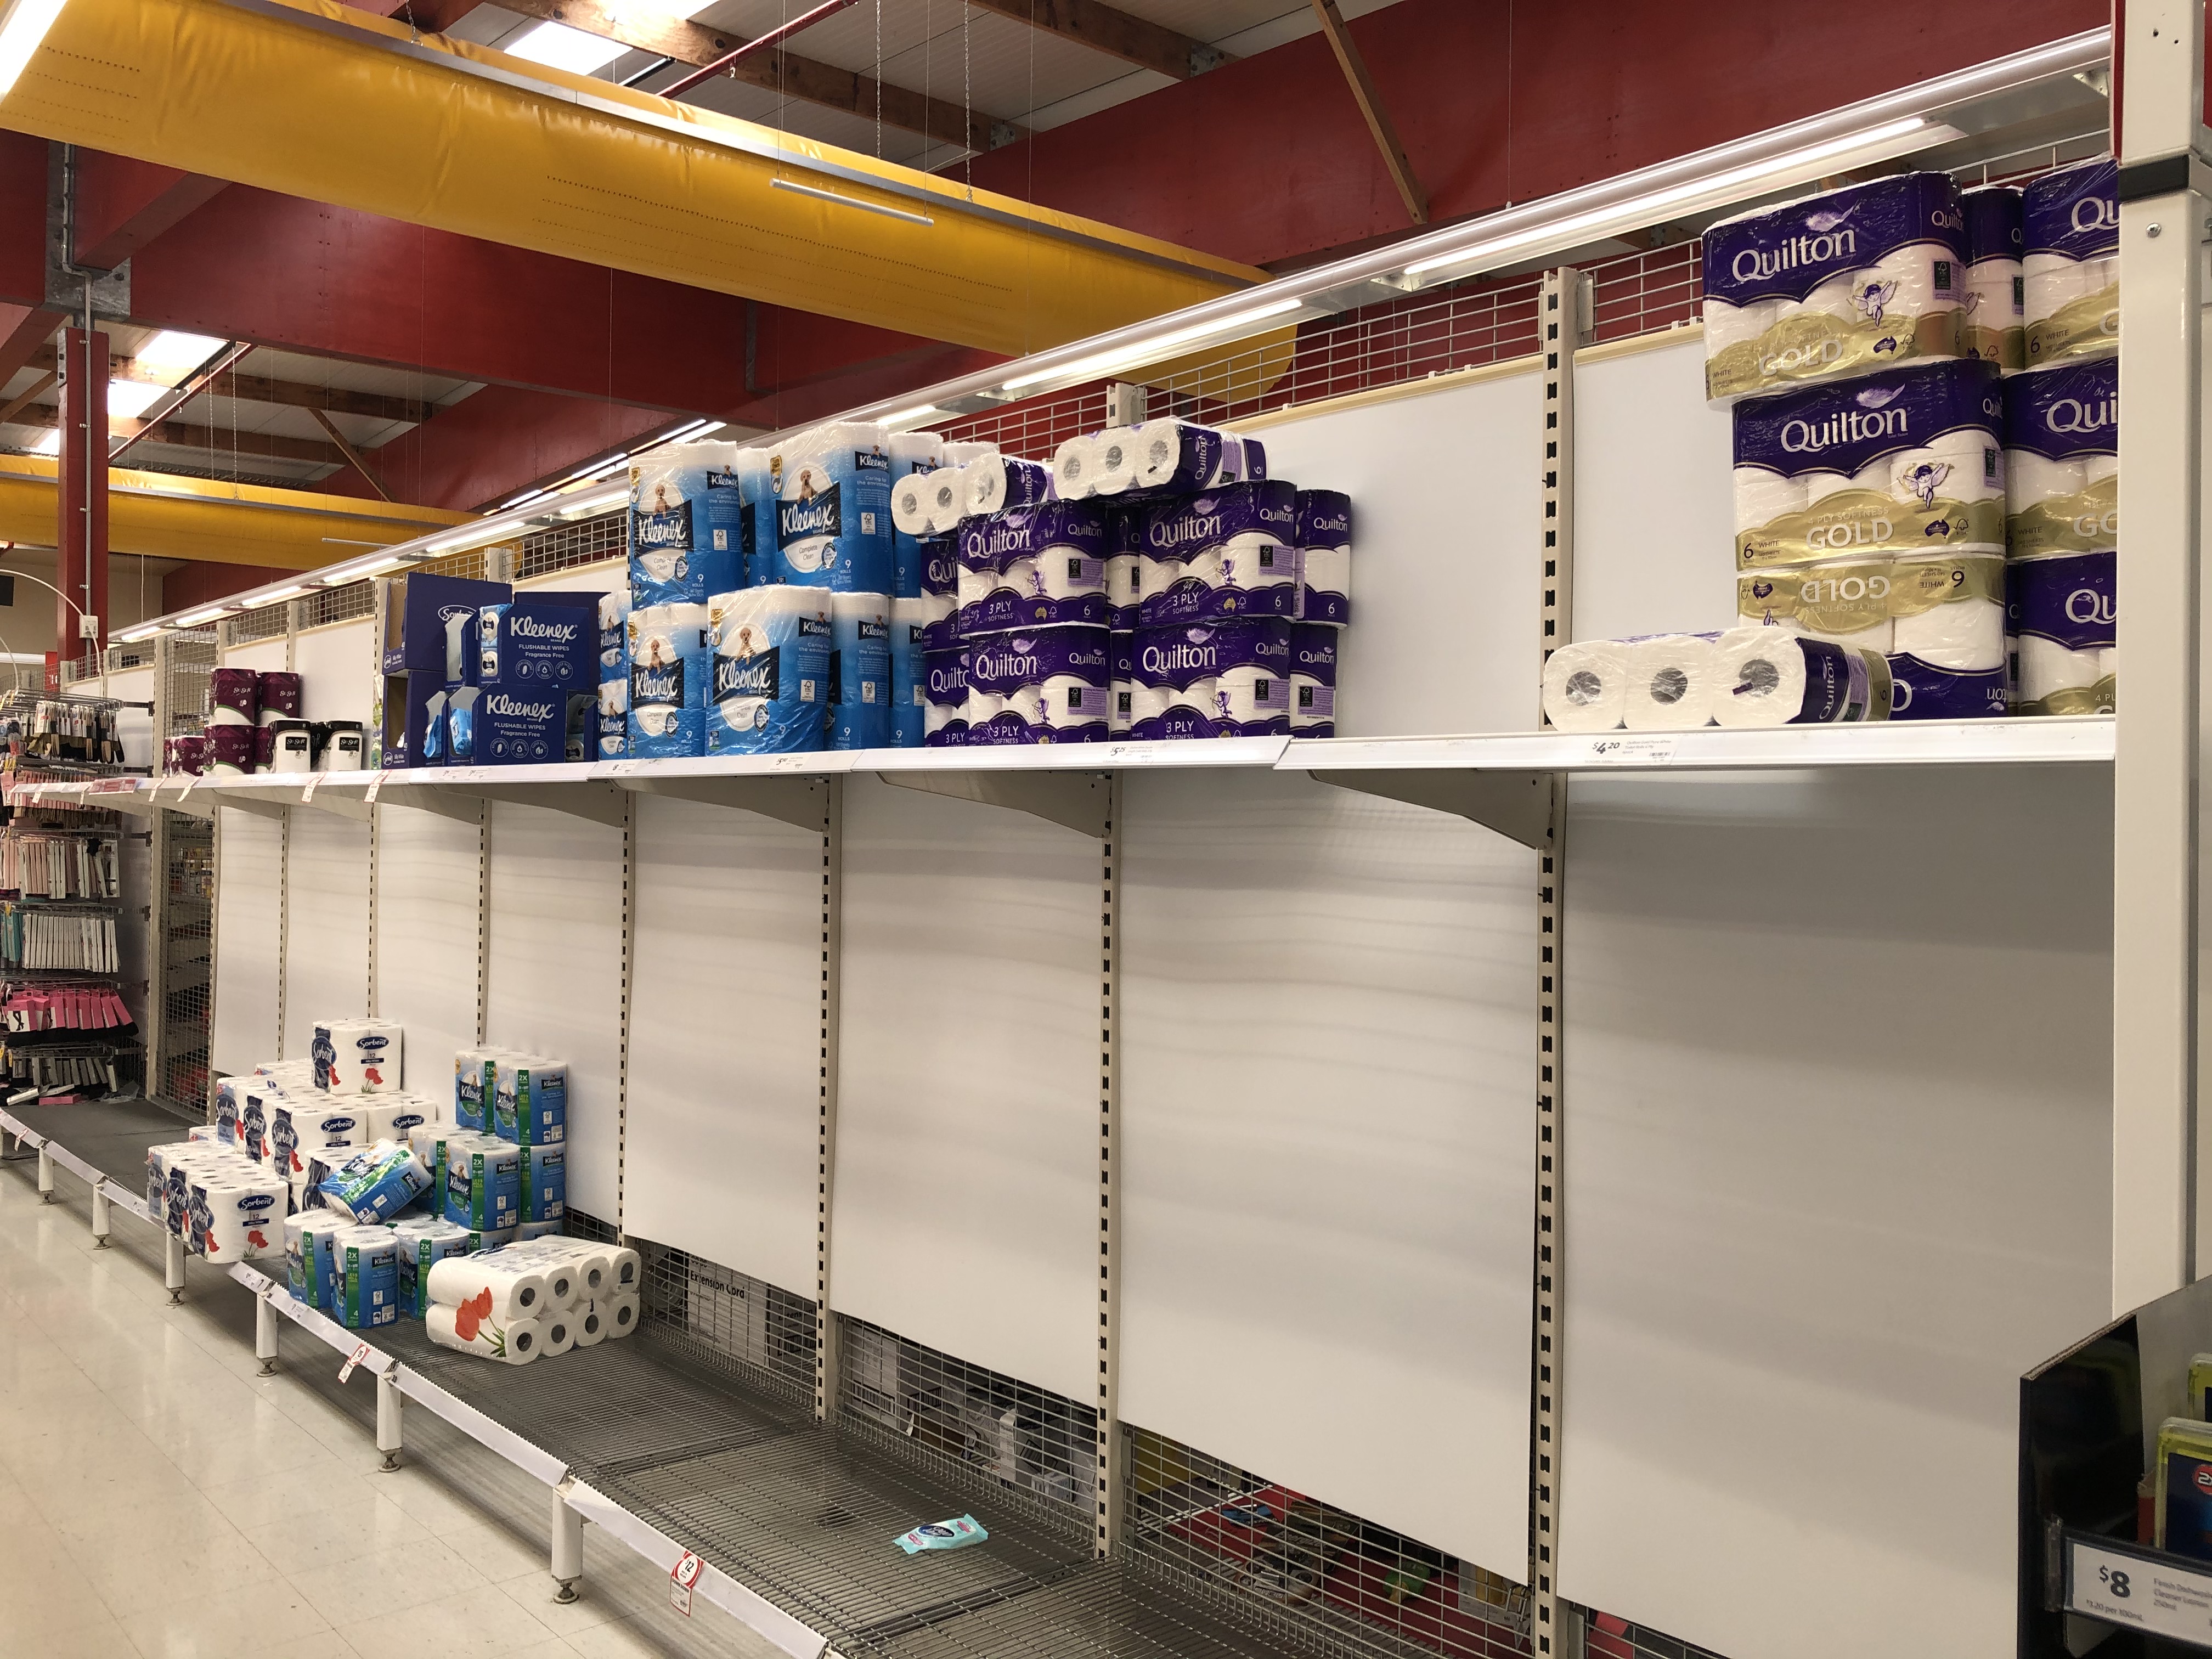 Toilet paper shelves emptied in Sydney supermarket.